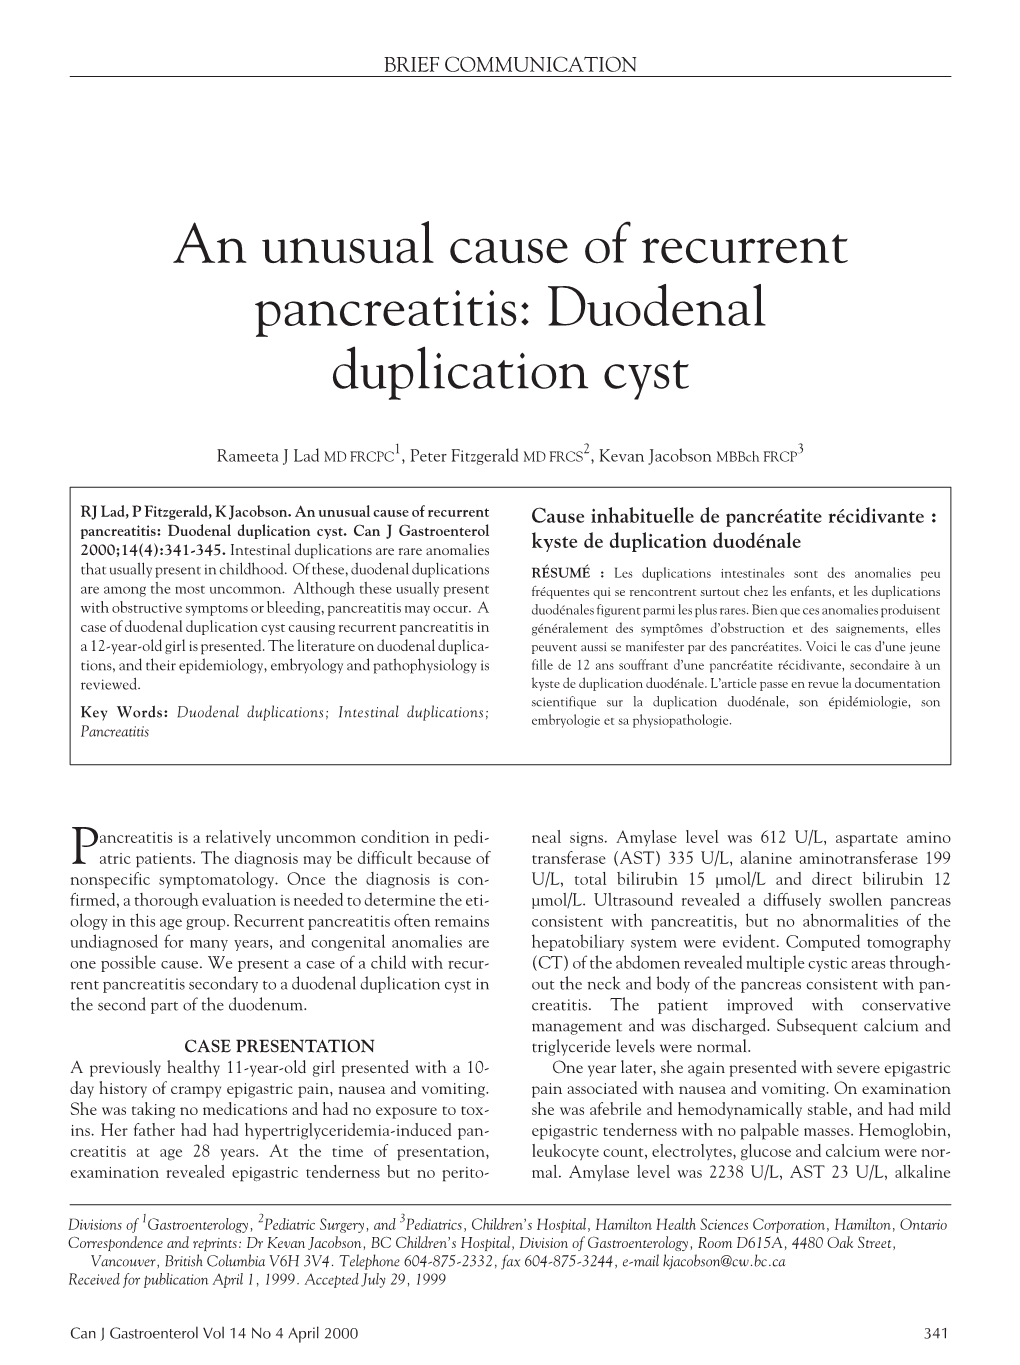 Duodenal Duplication Cyst